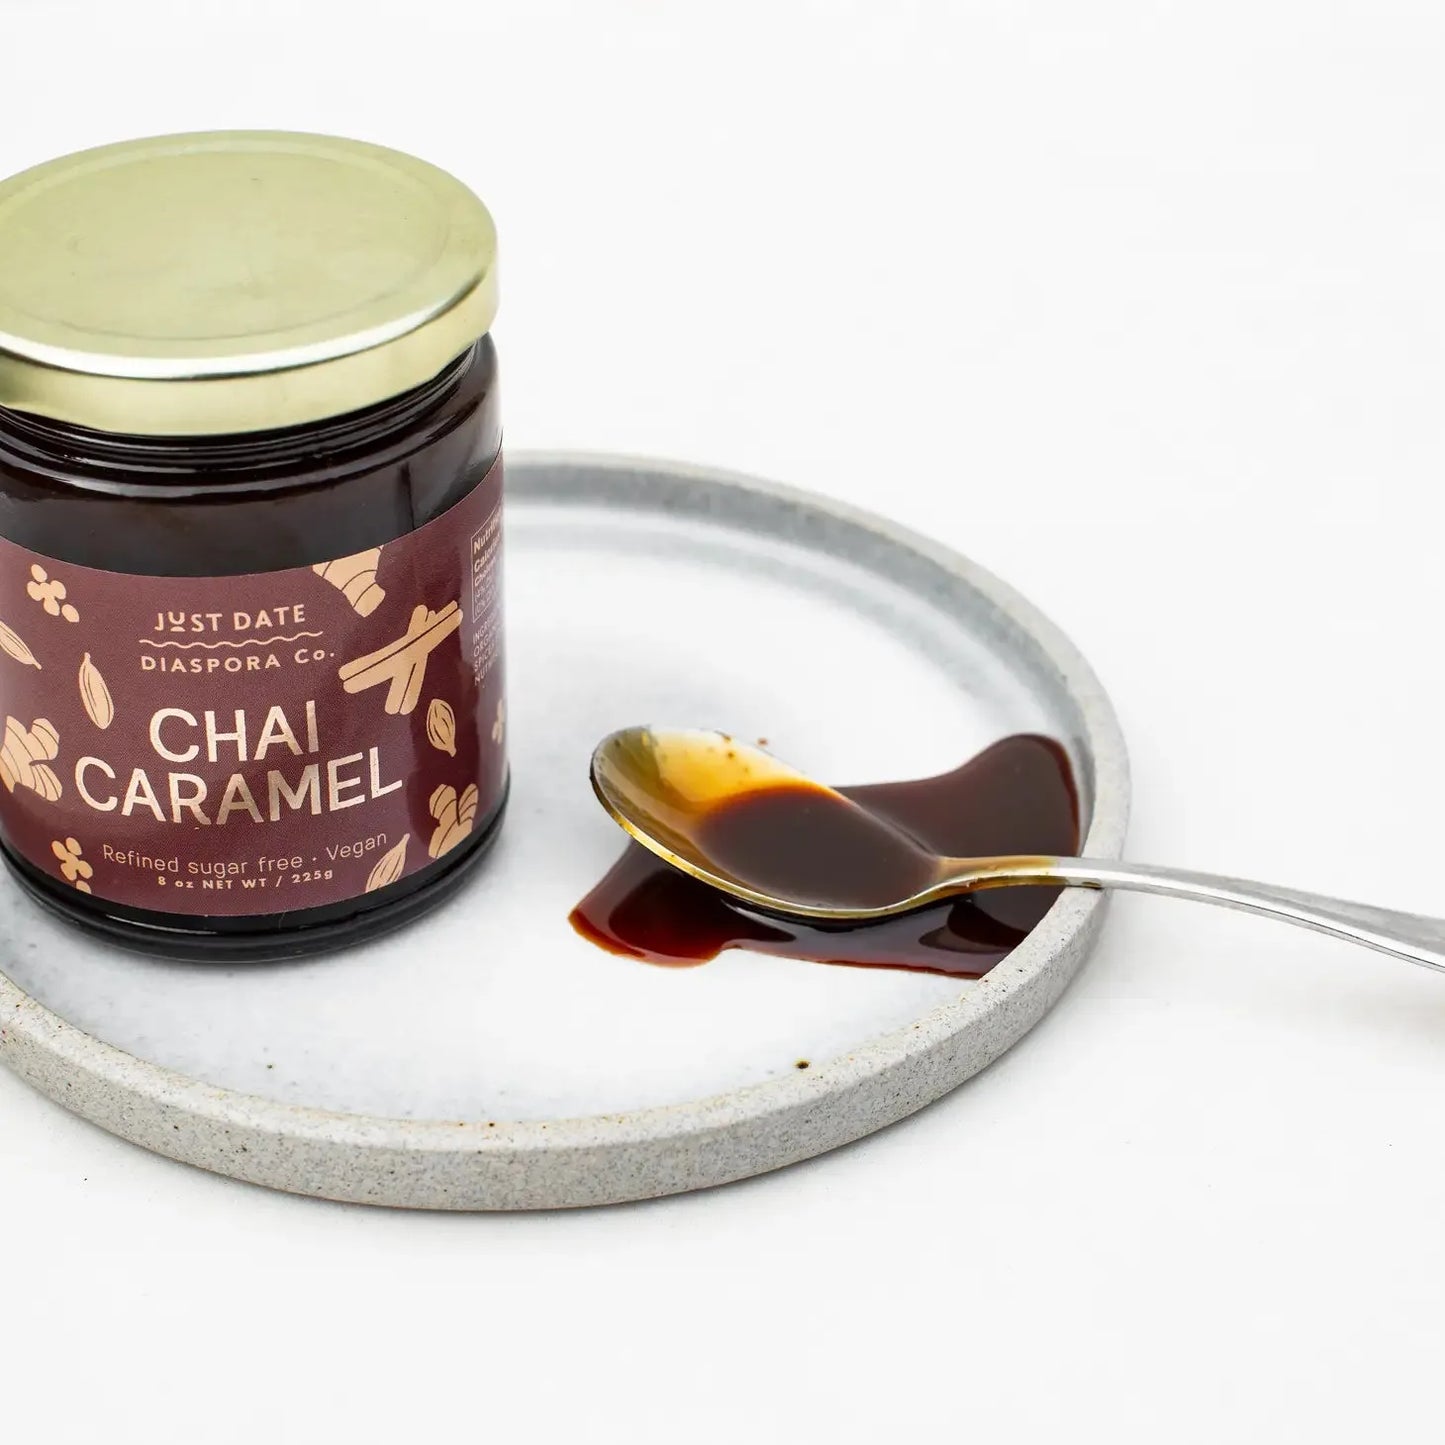 Just Date Chai Caramel - Low Glycemic Date Sweetener